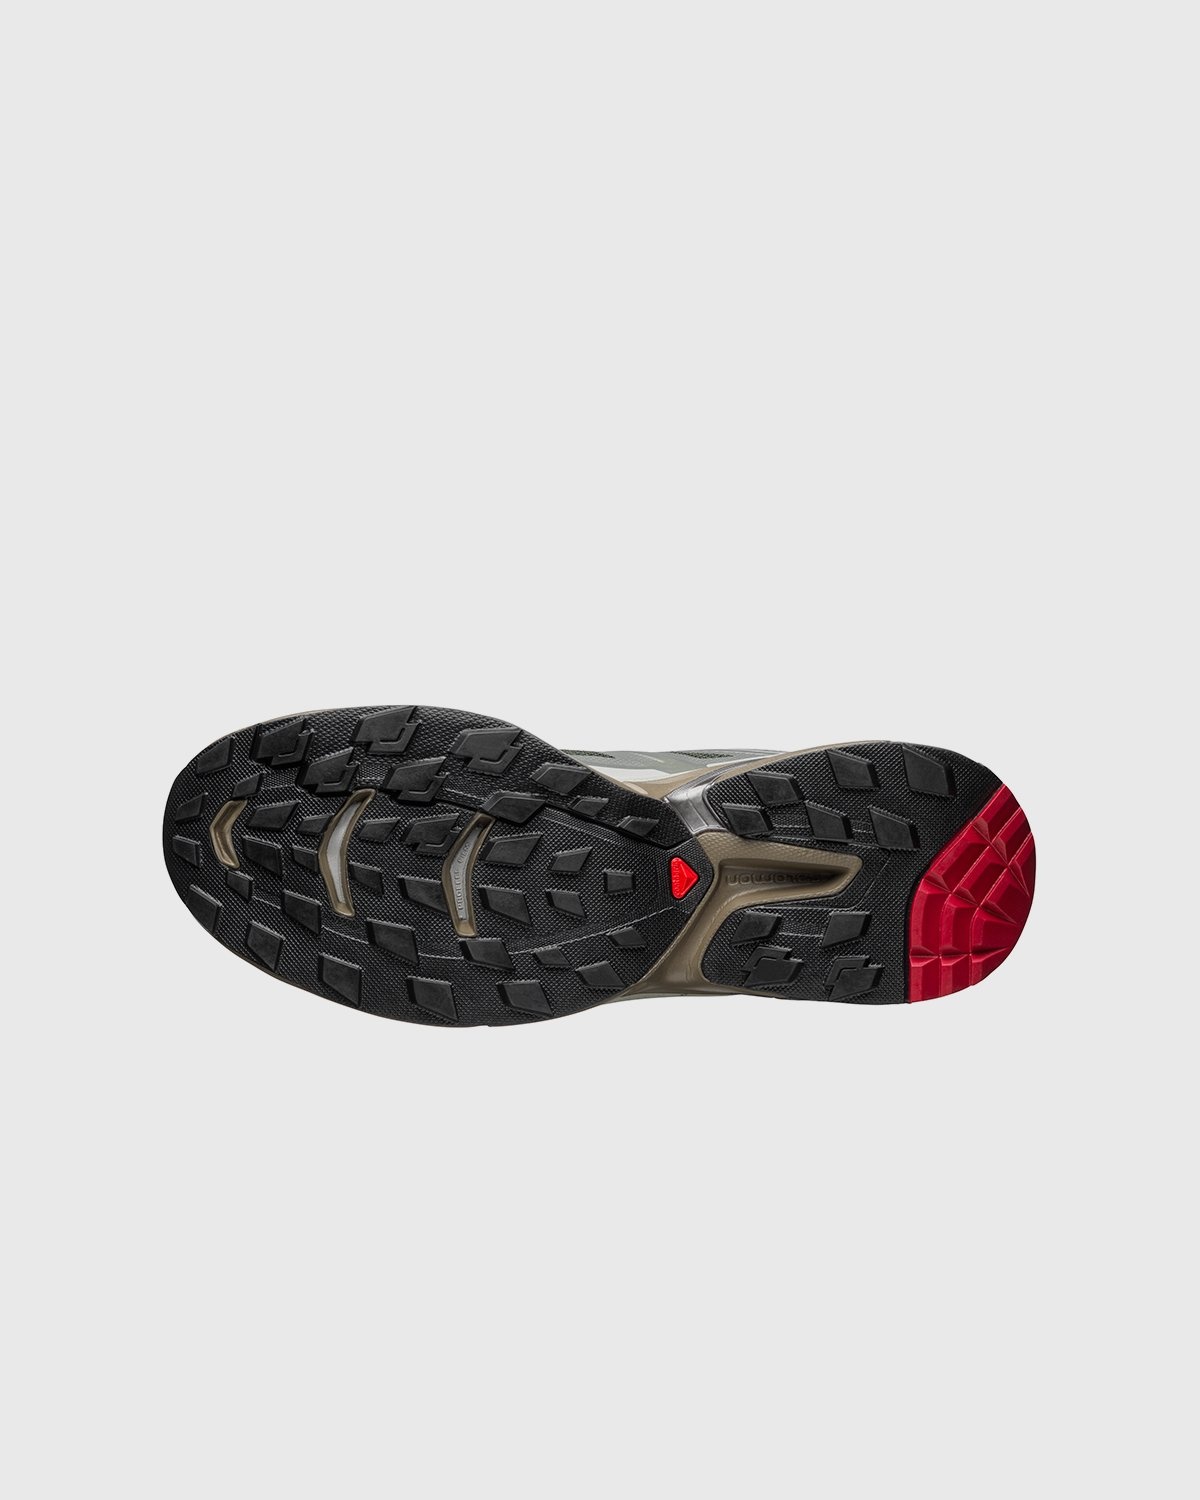 Salomon – XT-Wings 2 Advanced Peat - Sneakers - Black - Image 5